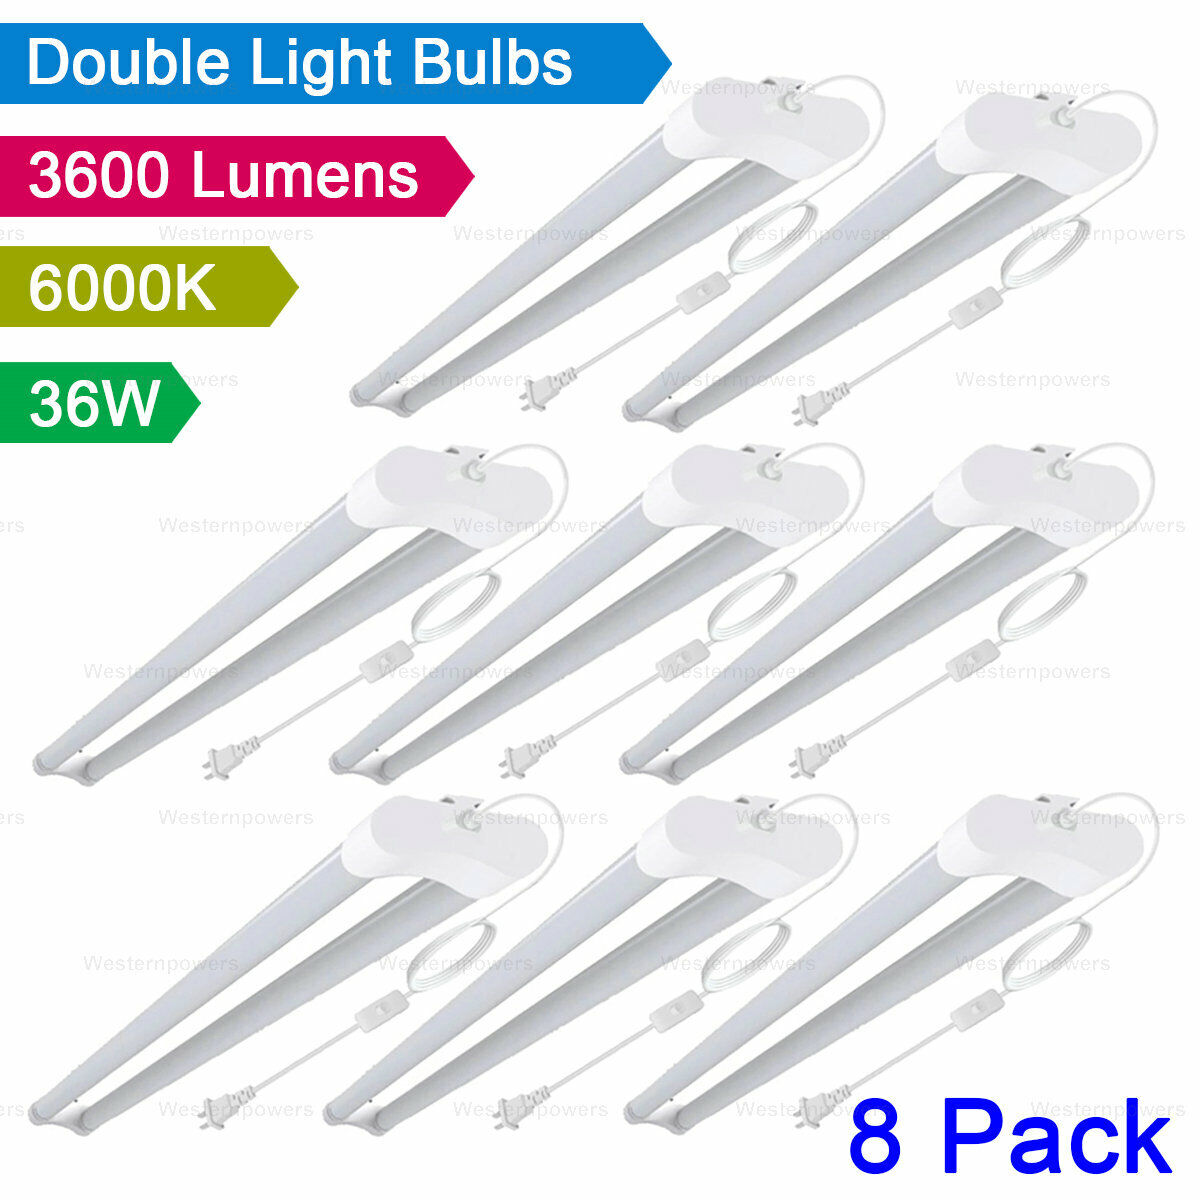 8 Pack 36W LED Shop Light Ceiling Workbench Garage LED Light 6000K Daylight westernpowers Does Not Apply